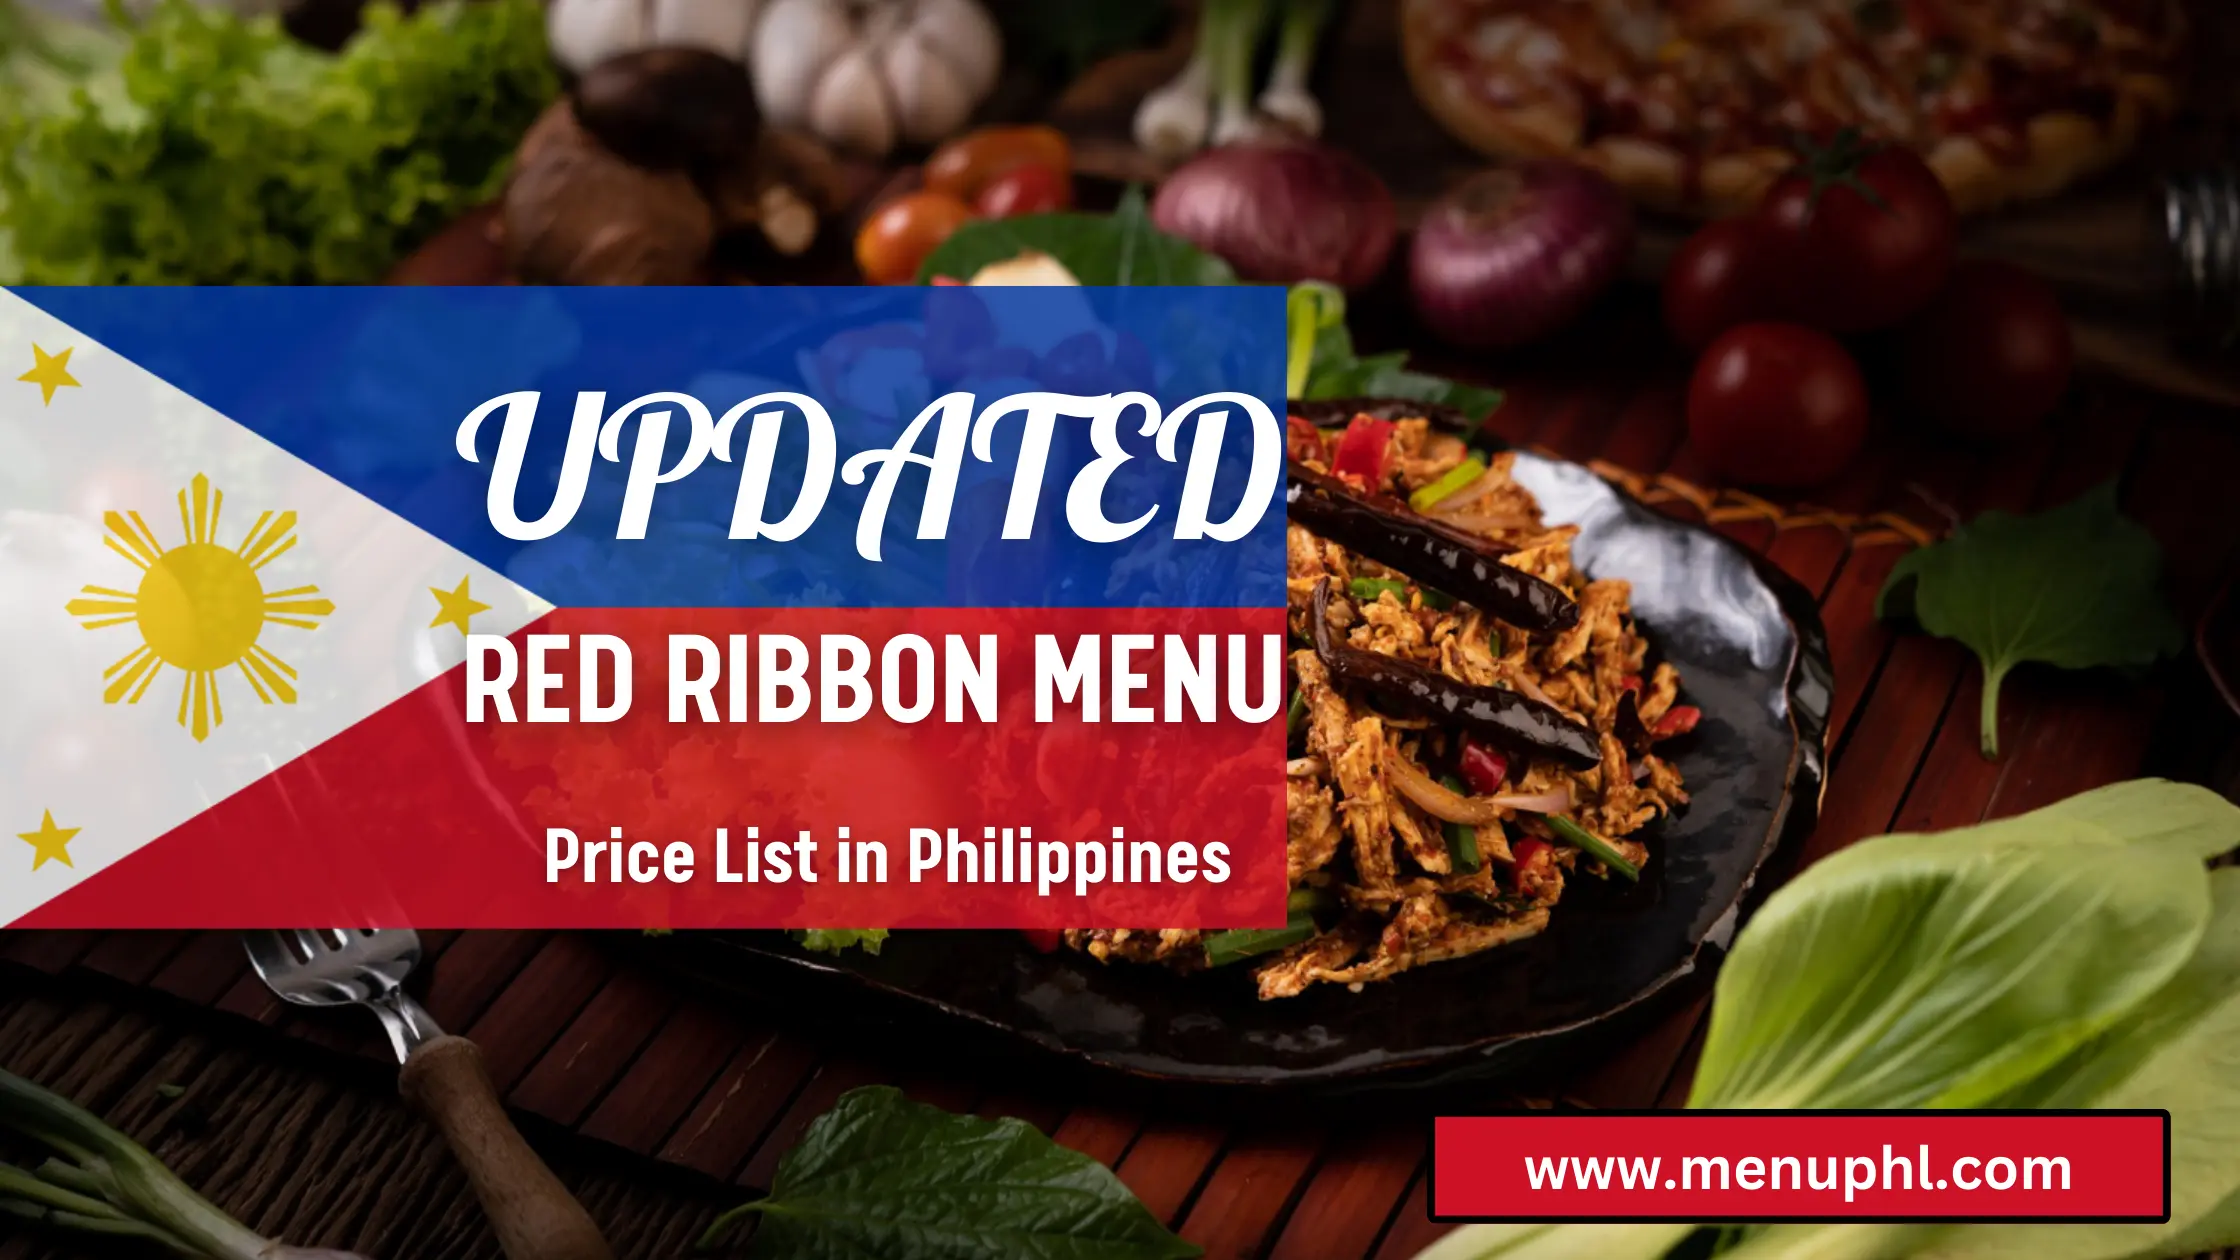 Best Cakes Philippines | Explore Cakes at Red Ribbon Menu